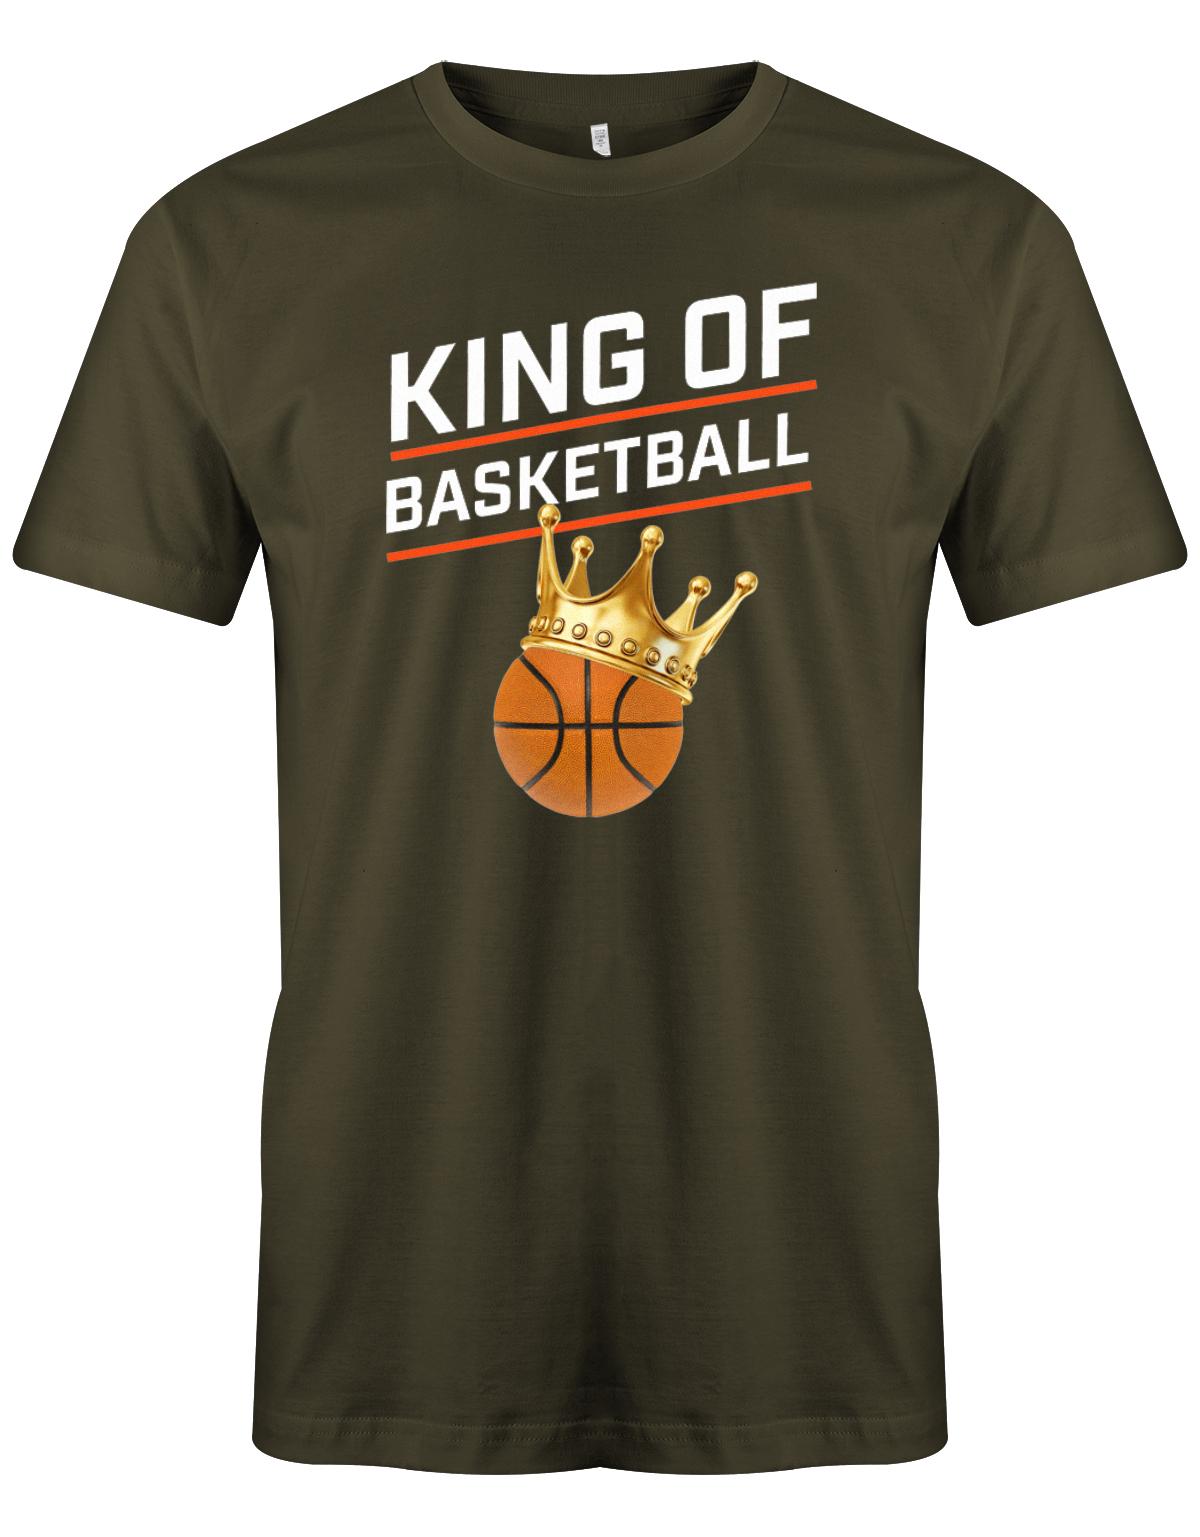 King-Of-Basketball-Herren-Shirt-Army